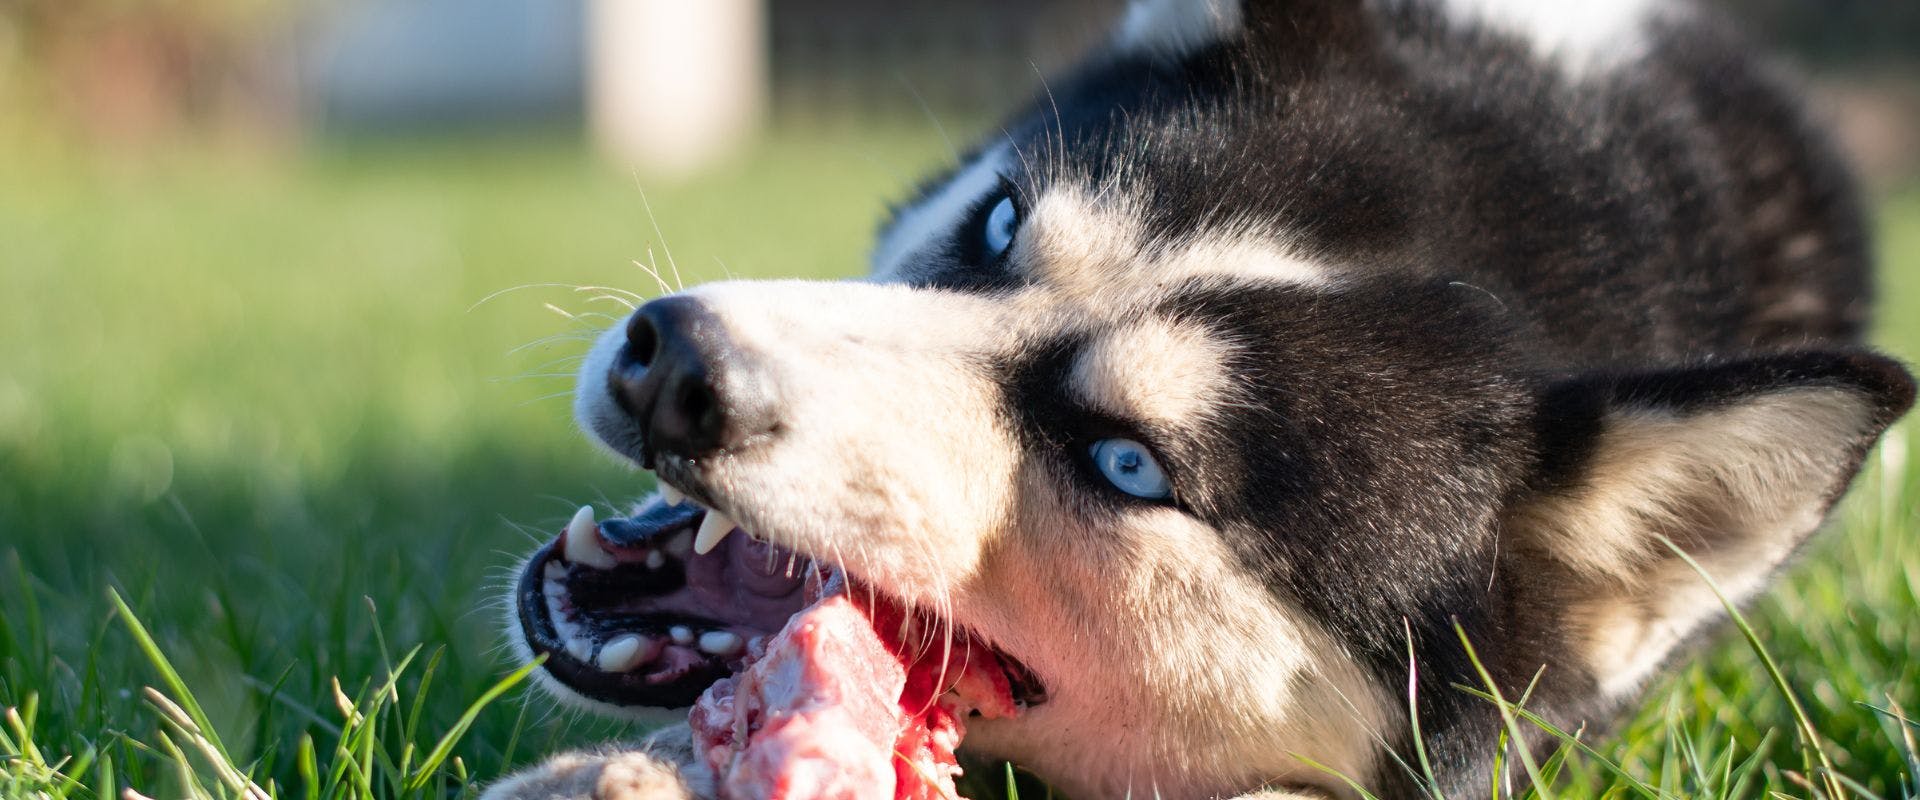 Husky dog eating bone